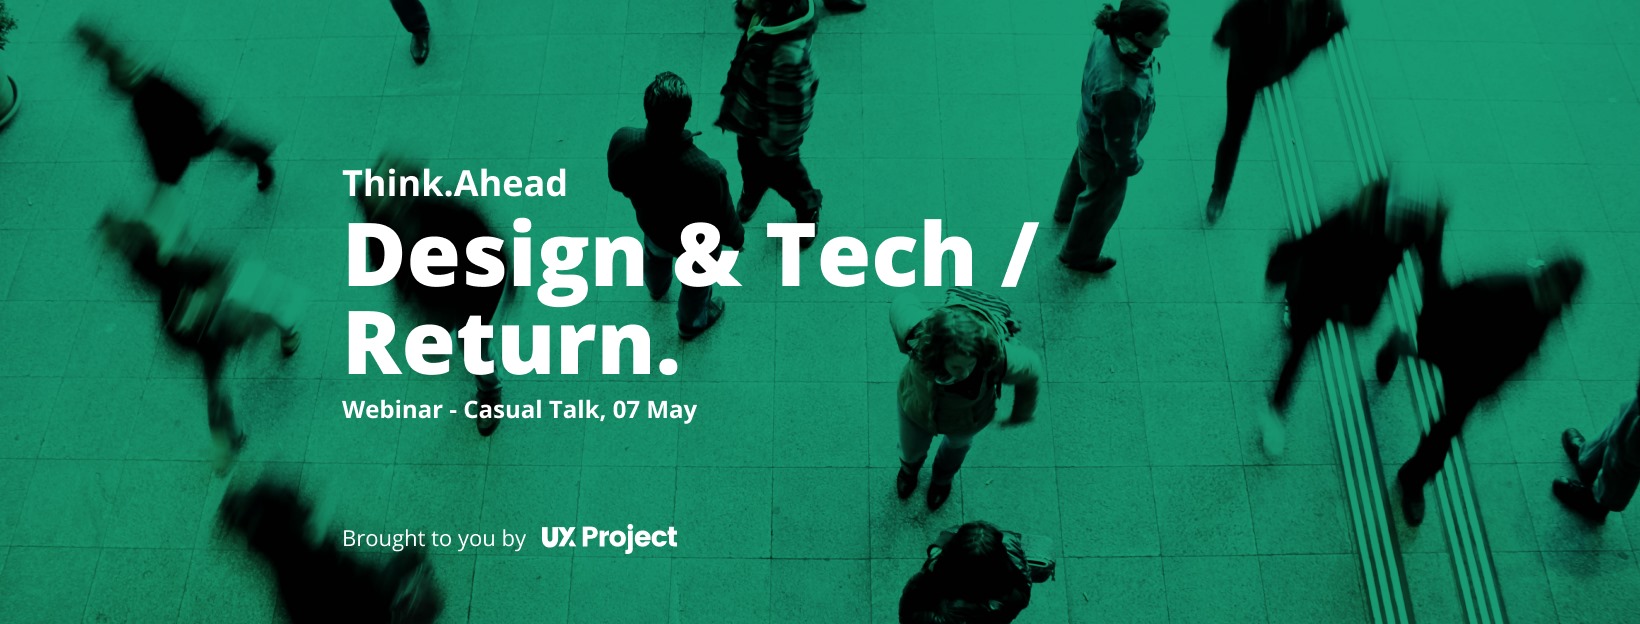 Design & Tech / Return – Think.Ahead Webinar